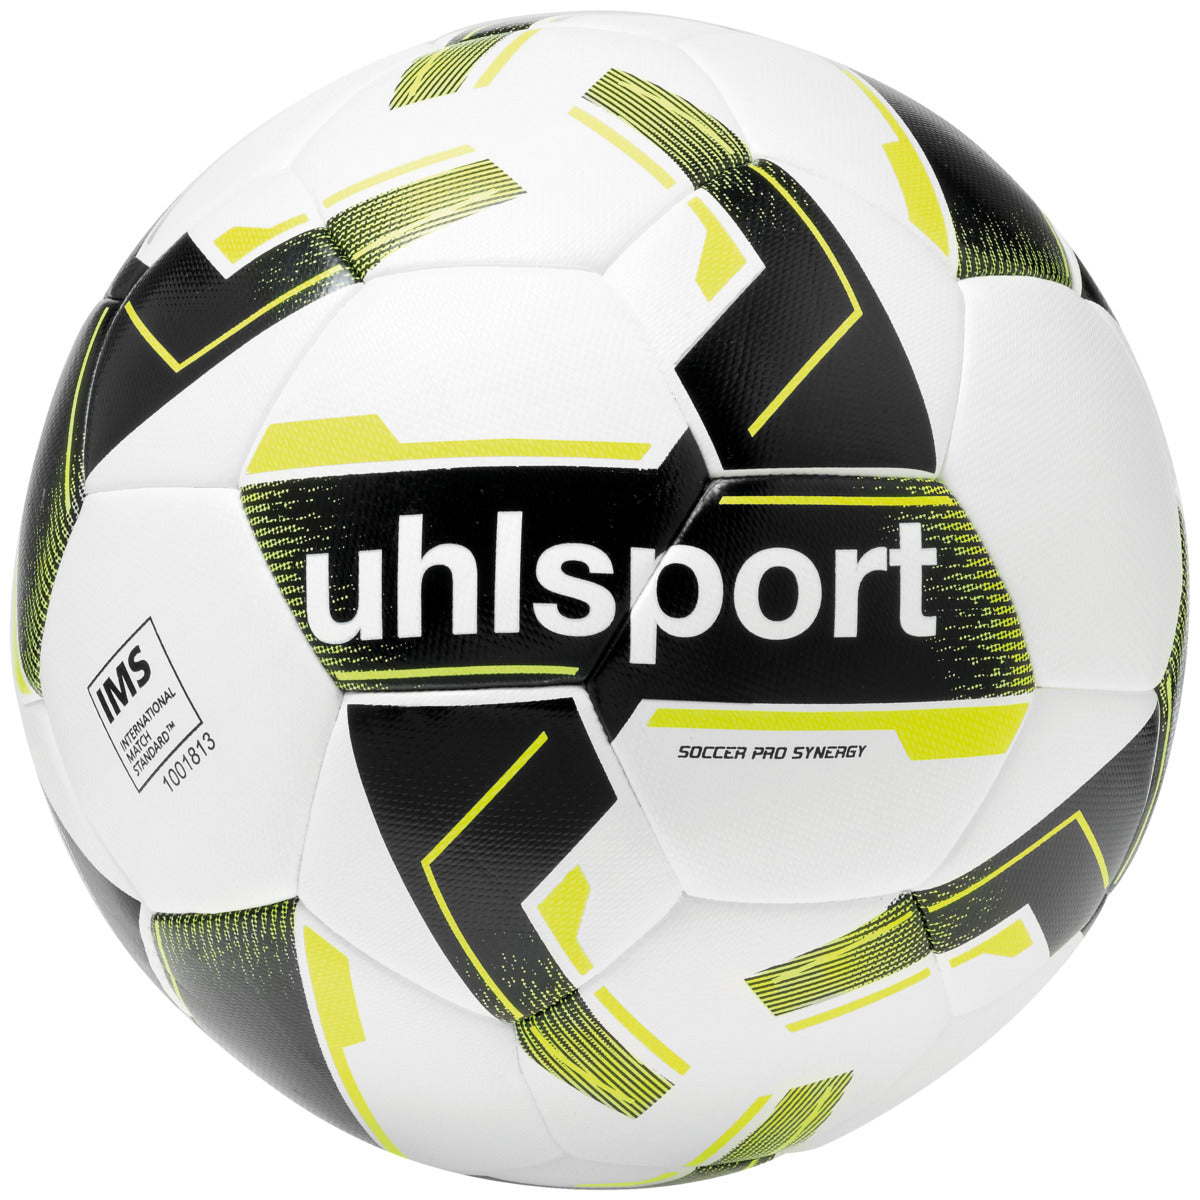 Uhlsport Soccer Pro Synergy - White